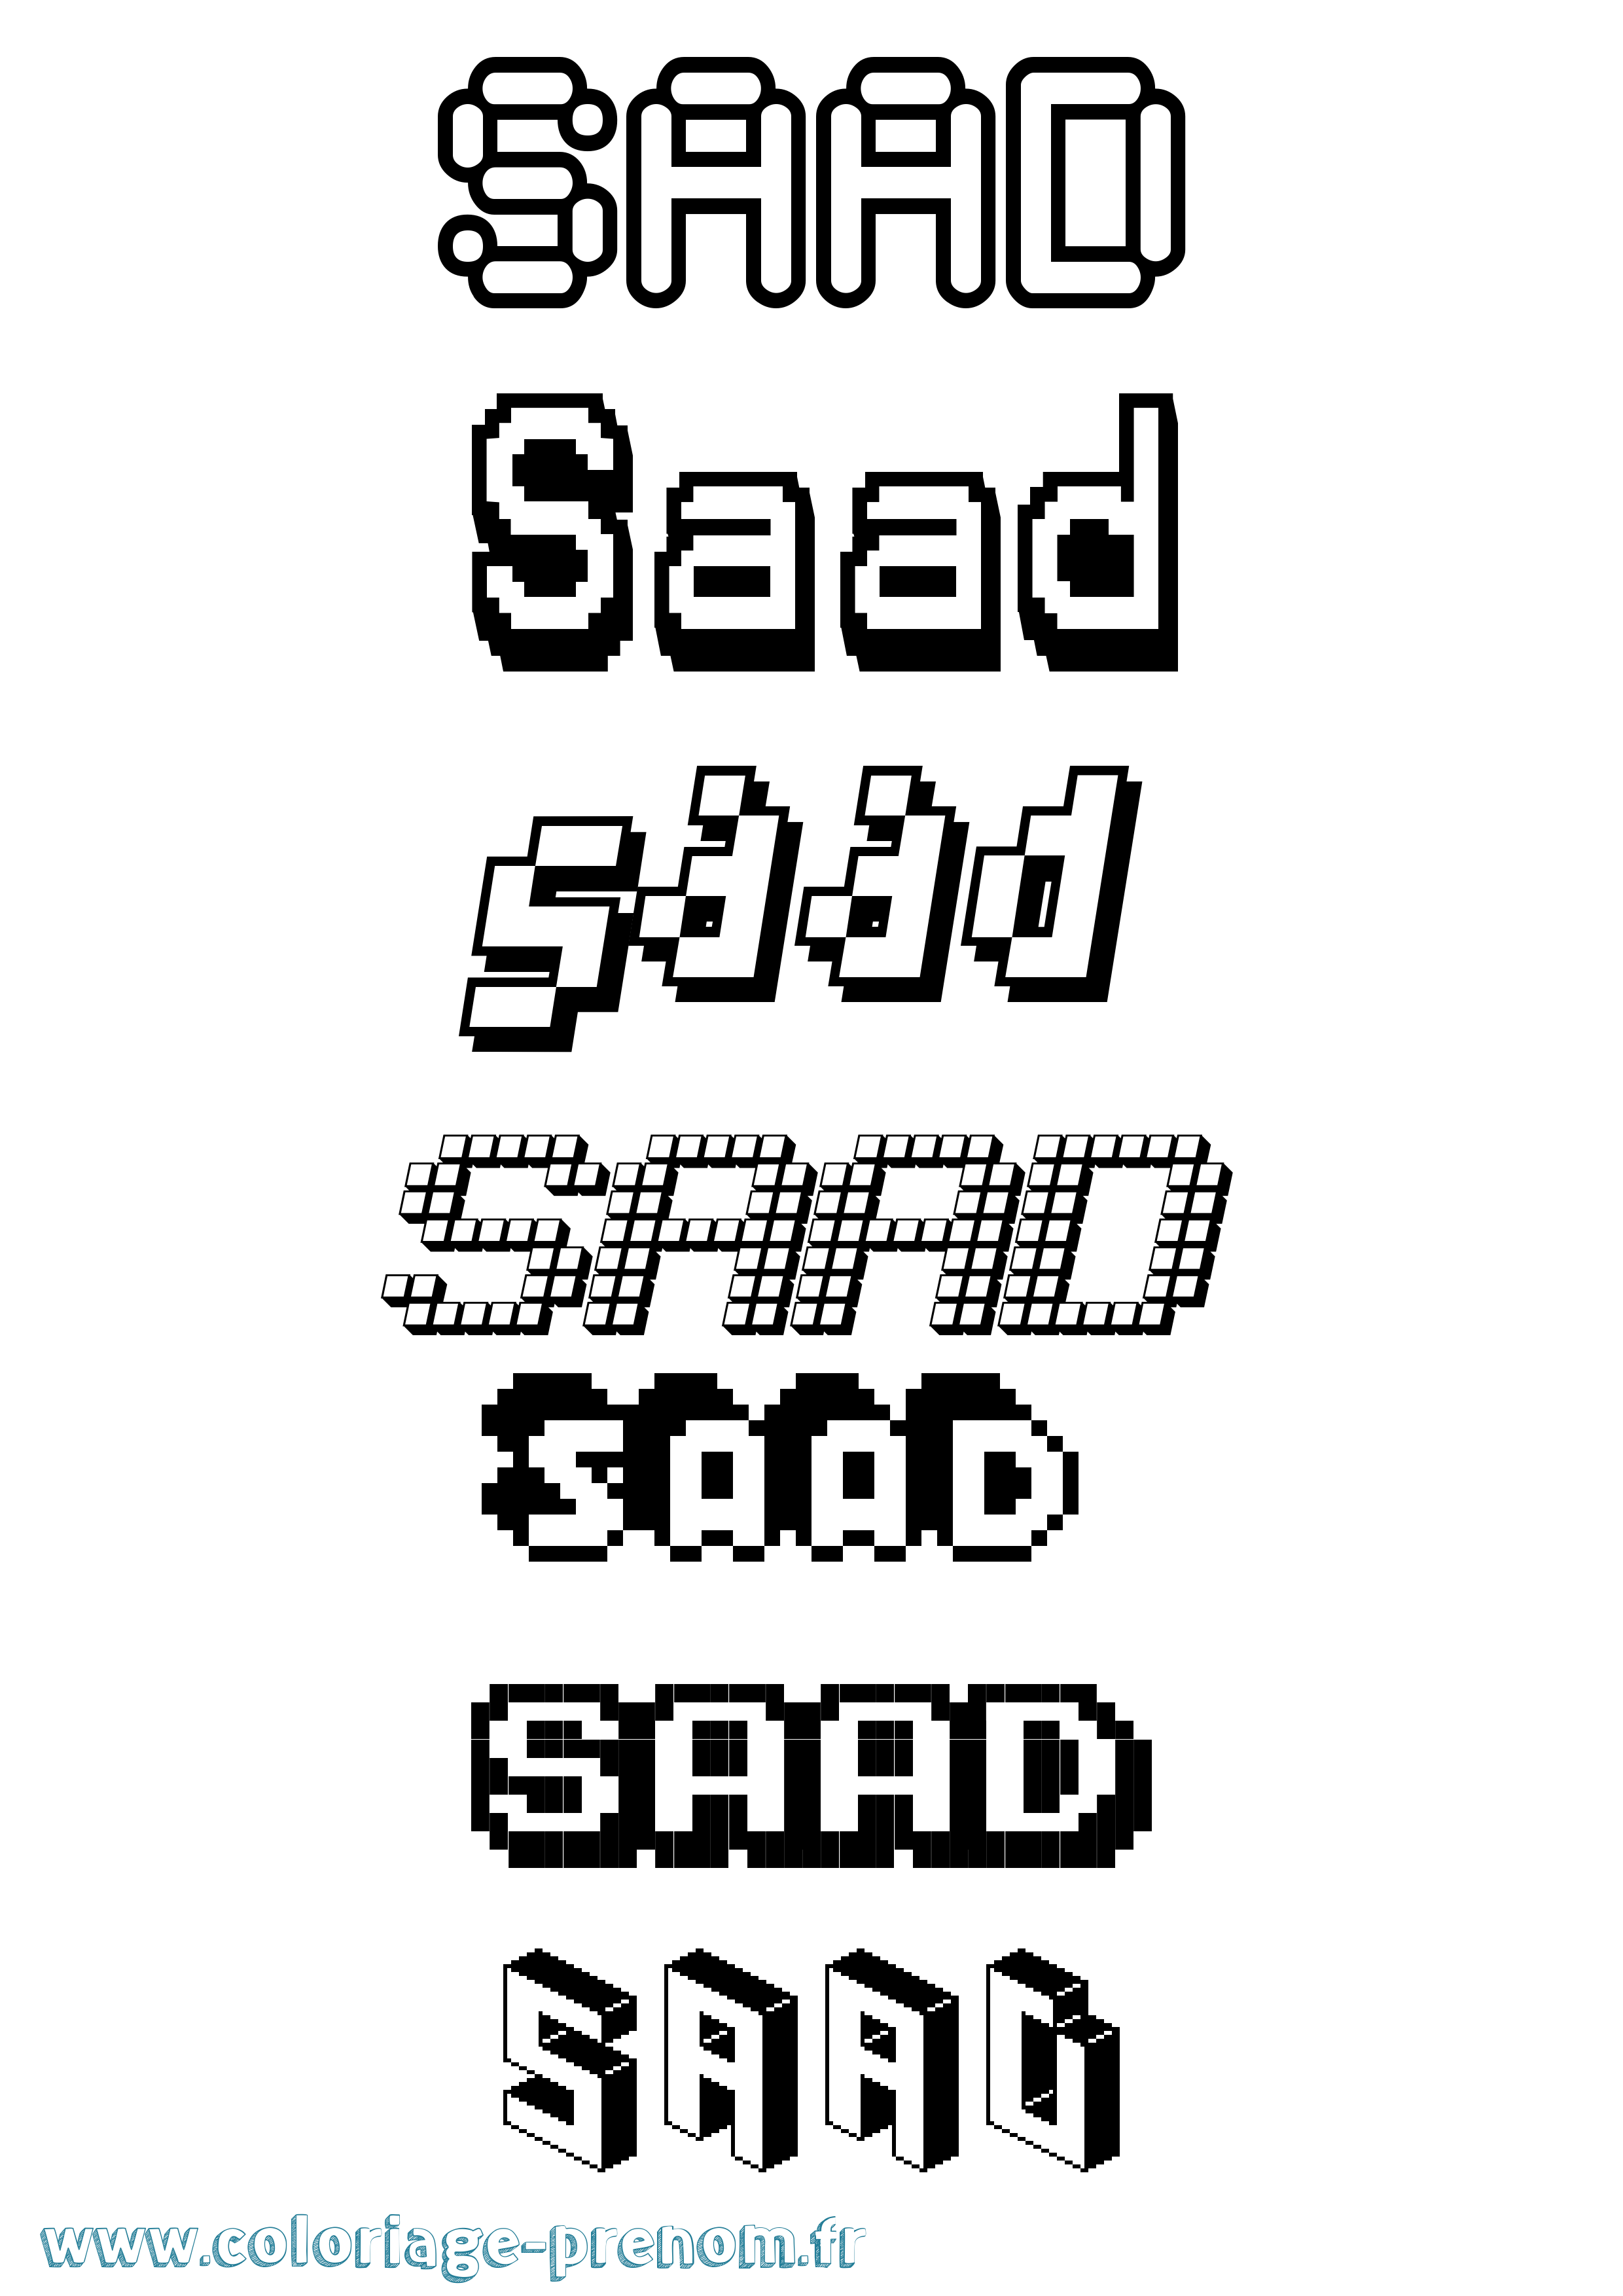 Coloriage prénom Saad